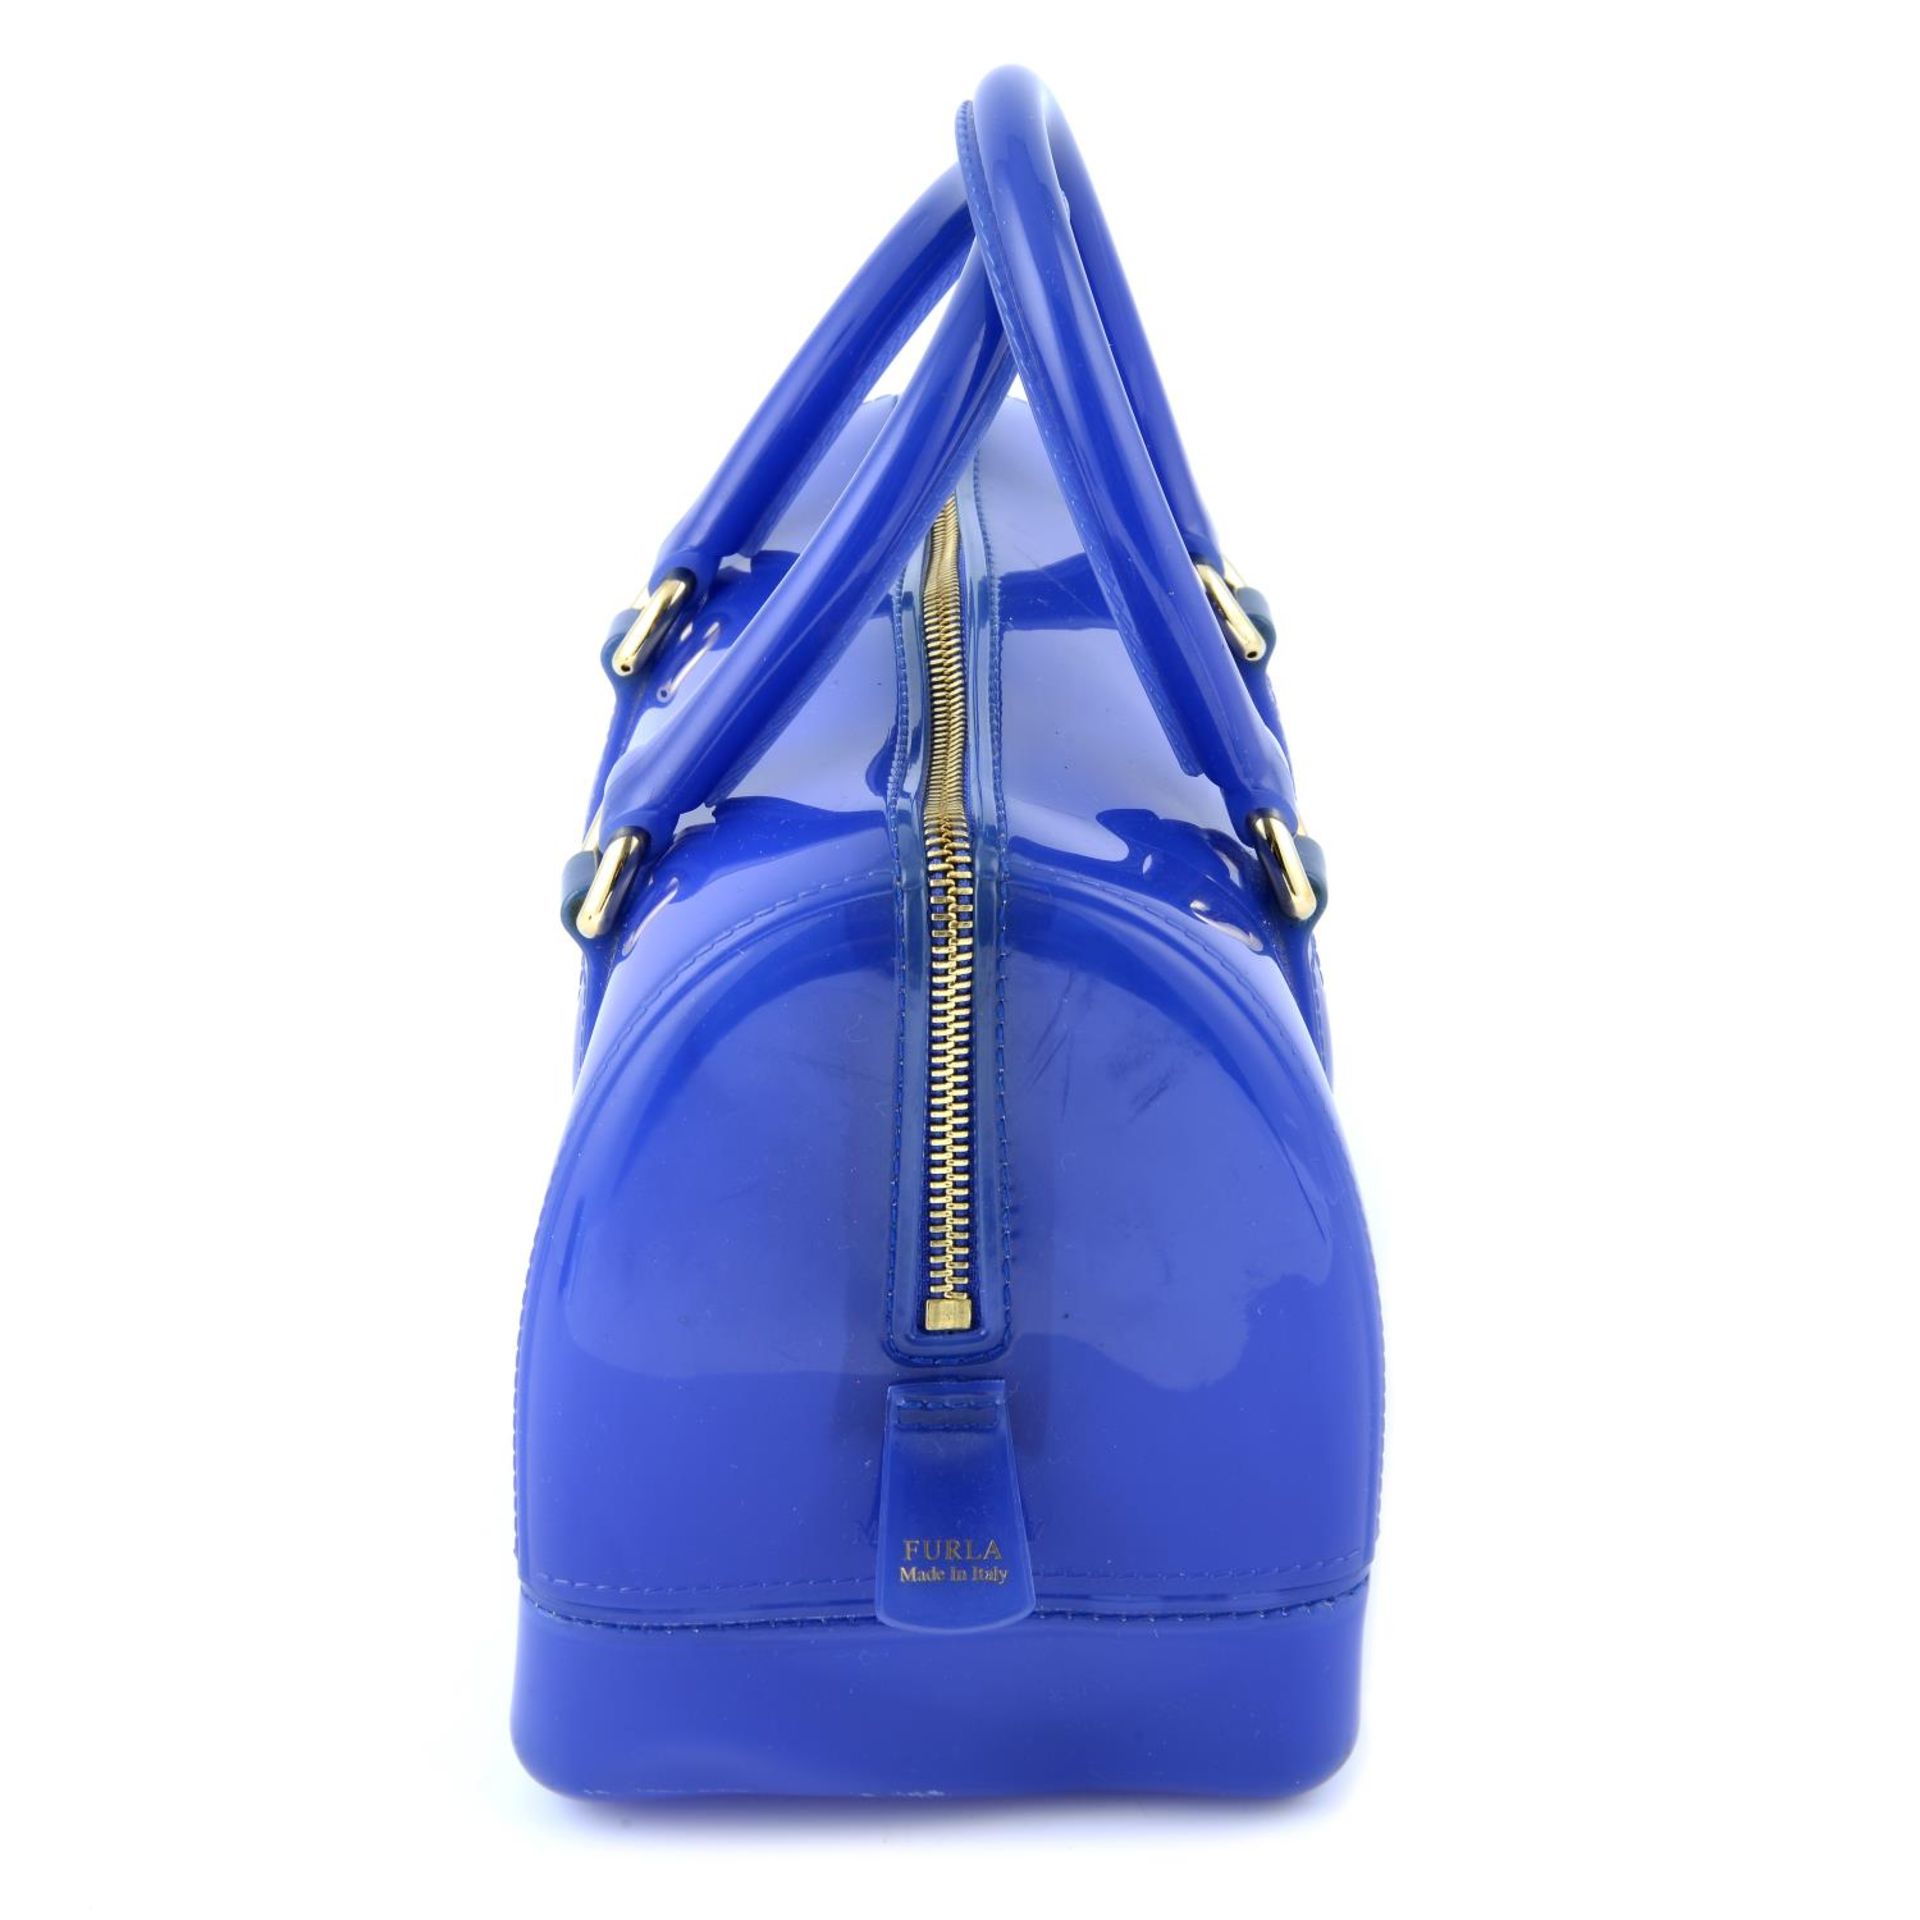 FURLA - two handbags. - Image 3 of 9